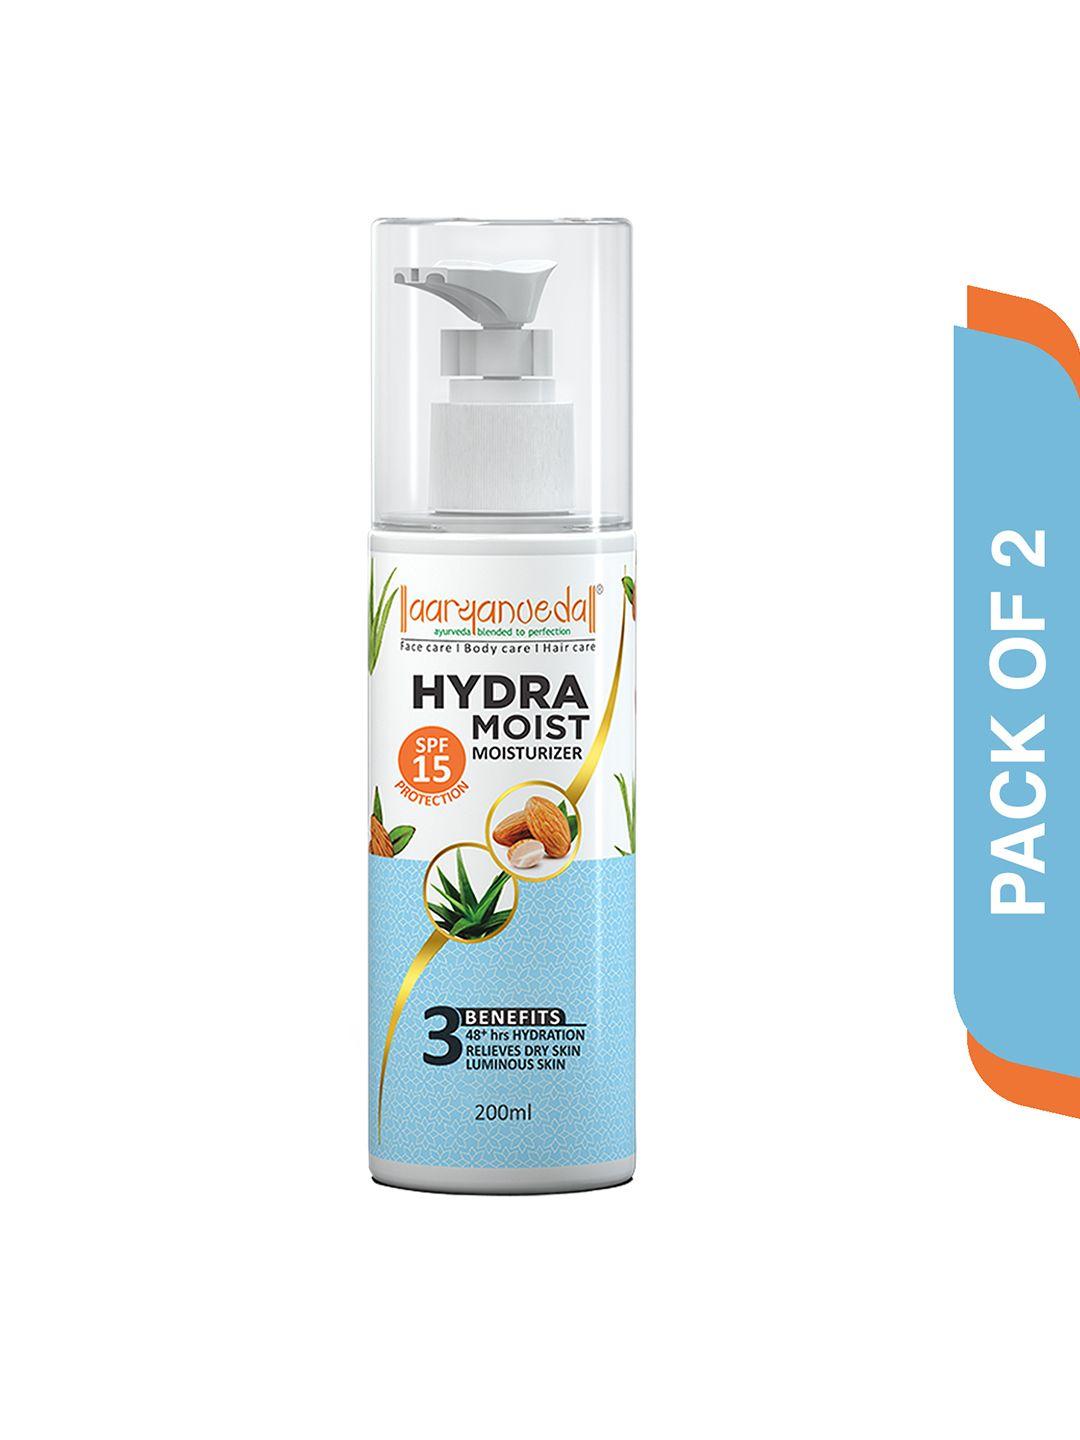 aryanveda set of 2 hydra moist spf 15 hydrating moisturizer sunscreen - 200 ml each